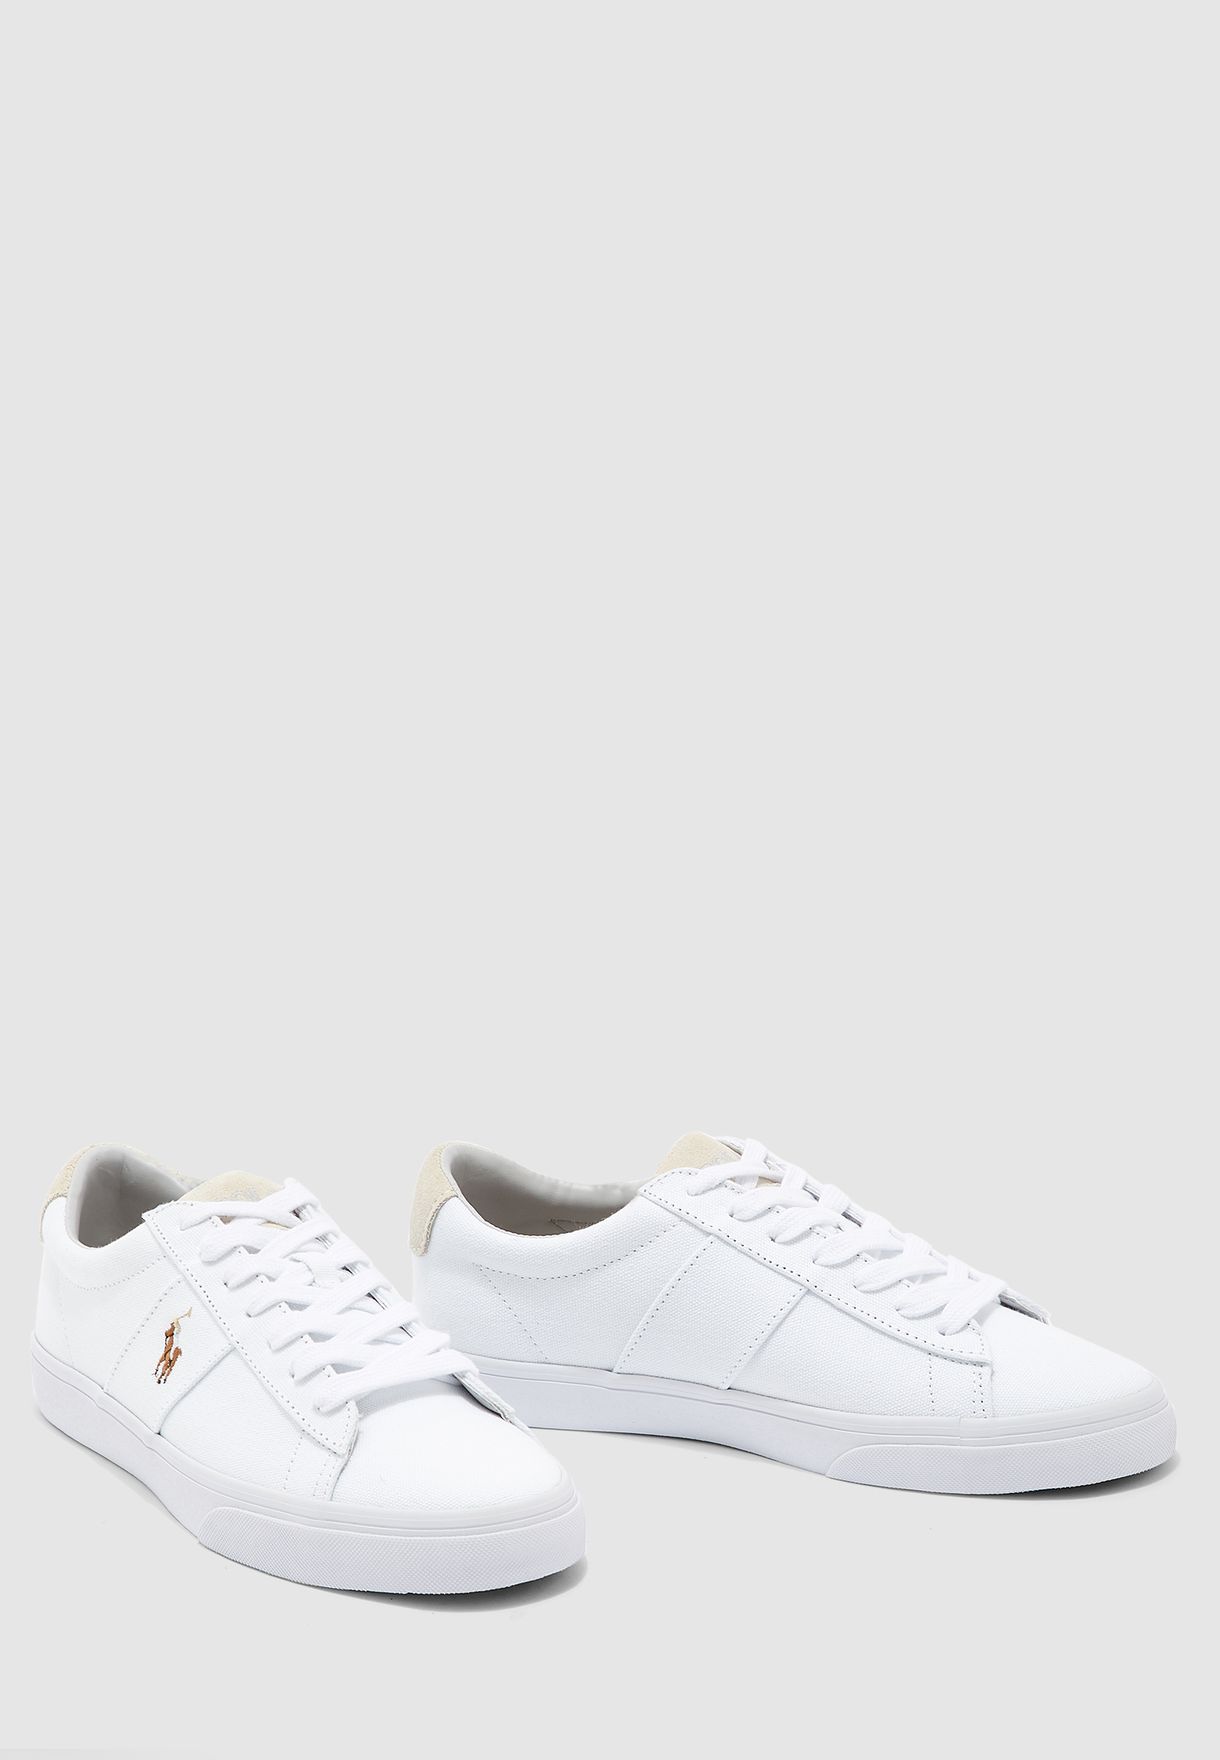 ralph lauren white tennis shoes